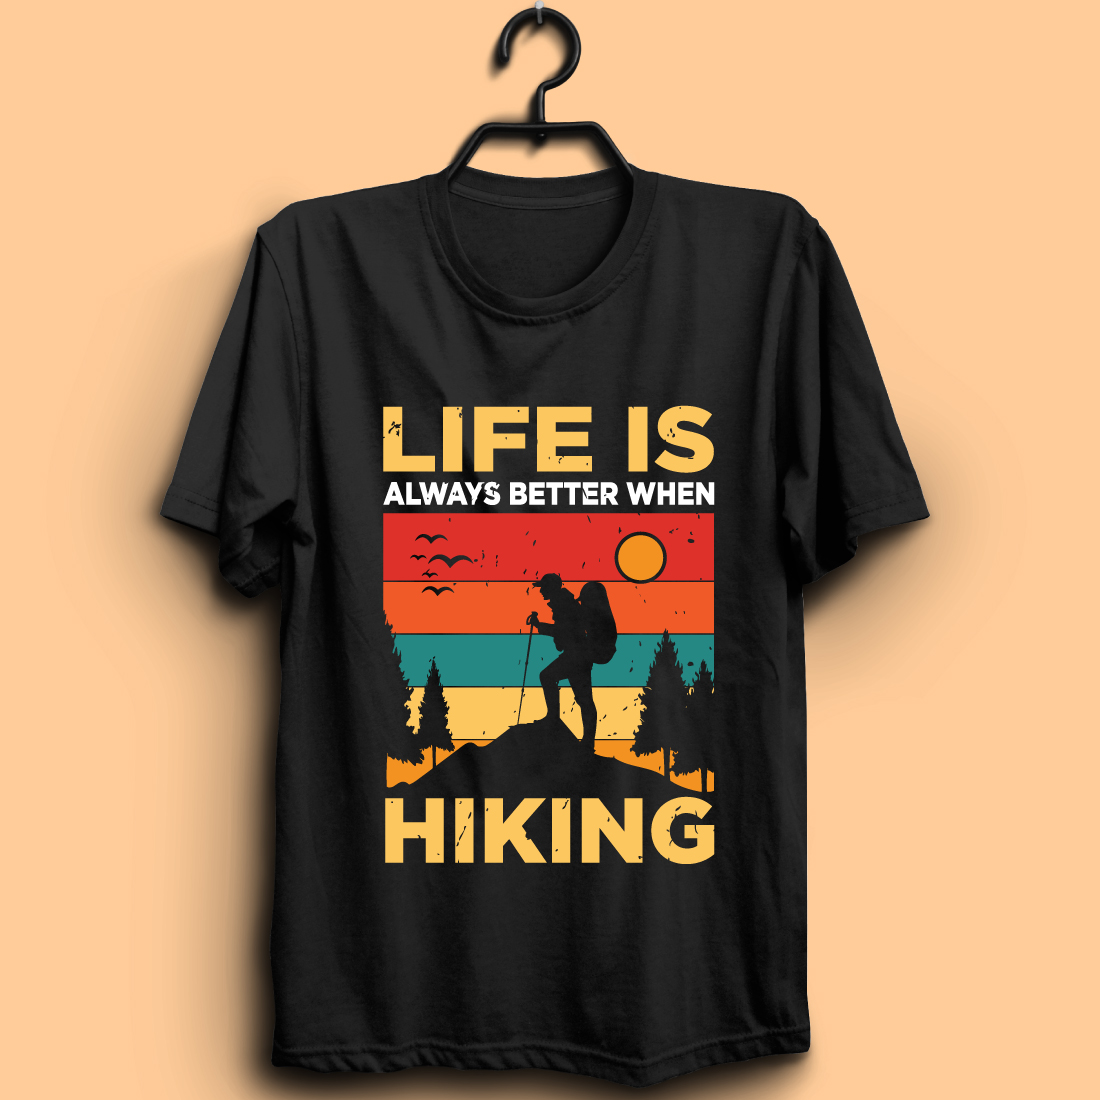 hiking t shirt design02 80